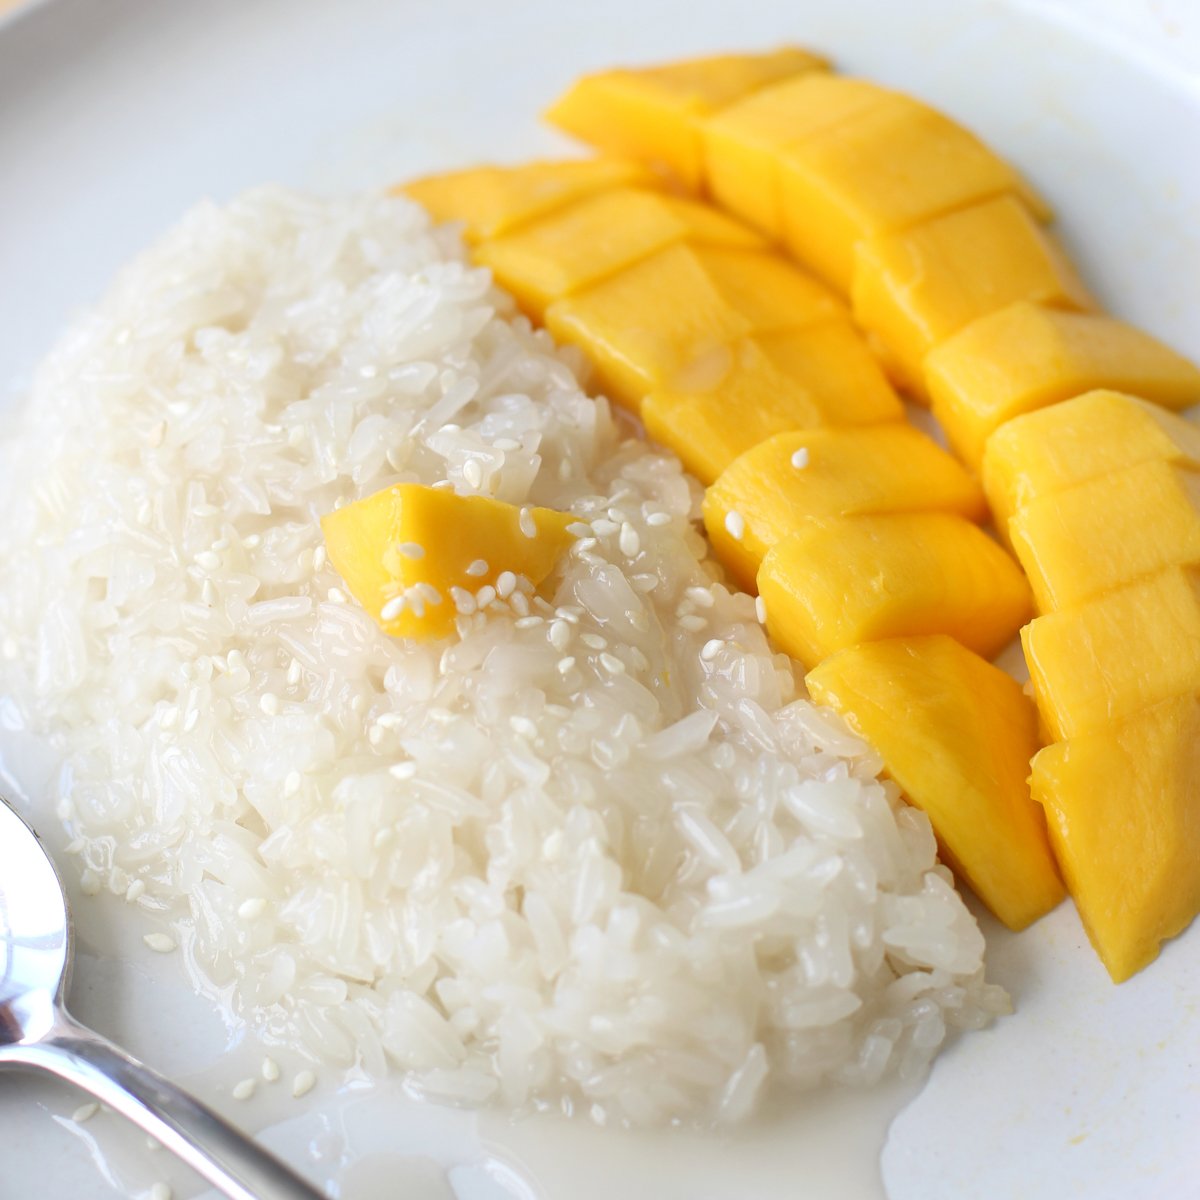 https://www.joyousapron.com/wp-content/uploads/2018/06/mango-and-sticky-rice-sq-pic.jpg